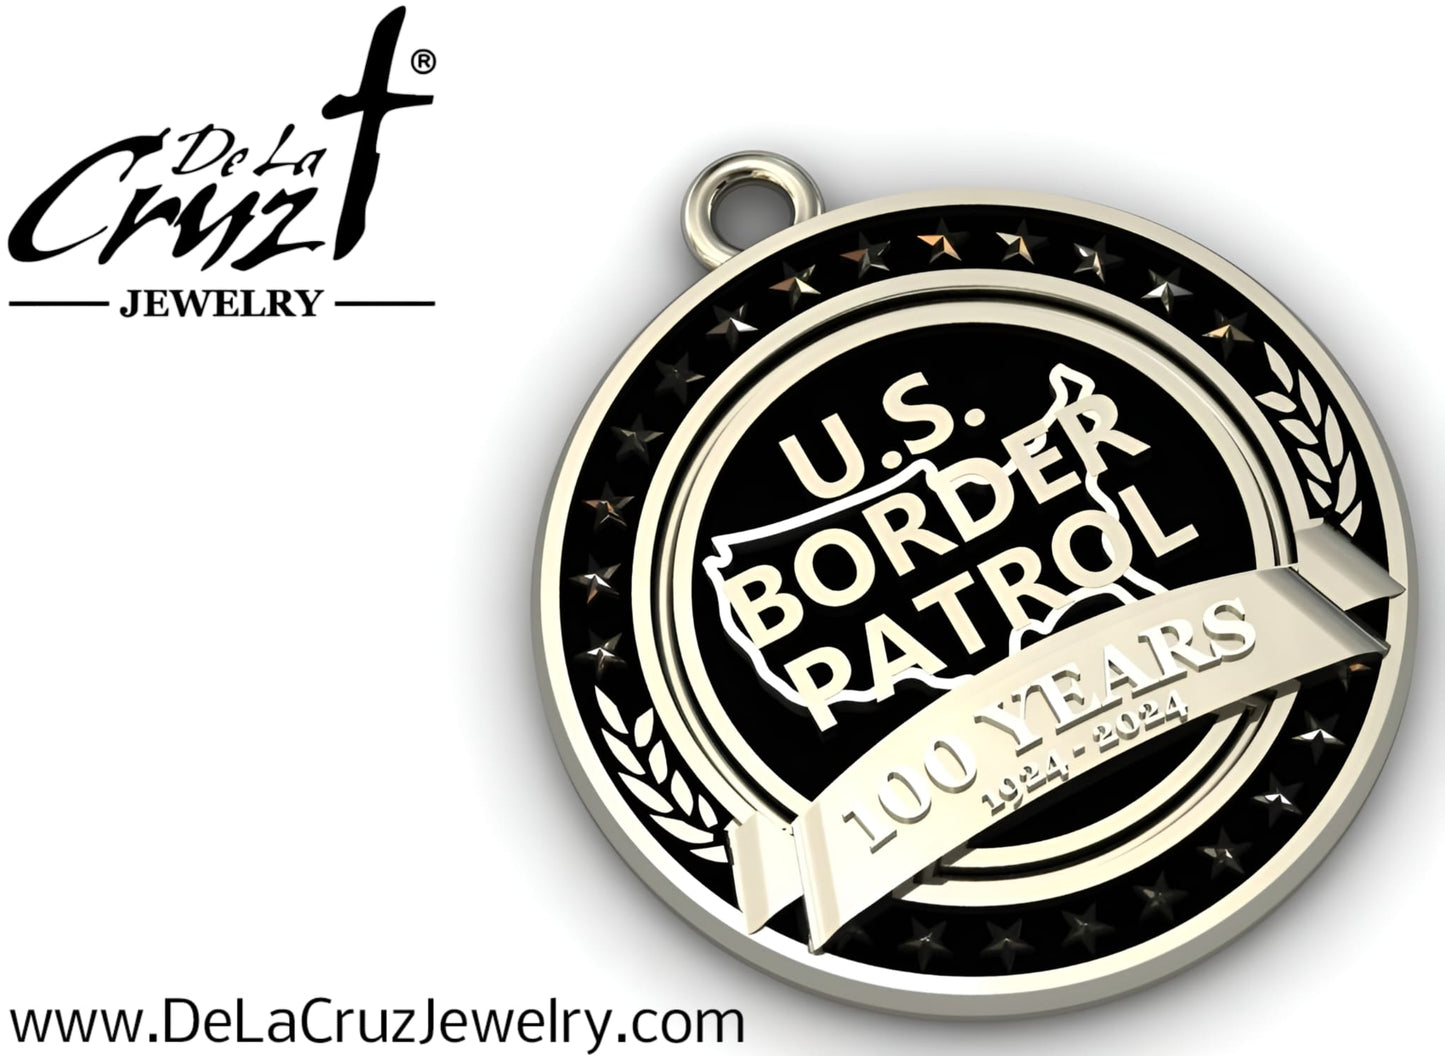 Border Patrol Centennial Sterling Silver Pendant